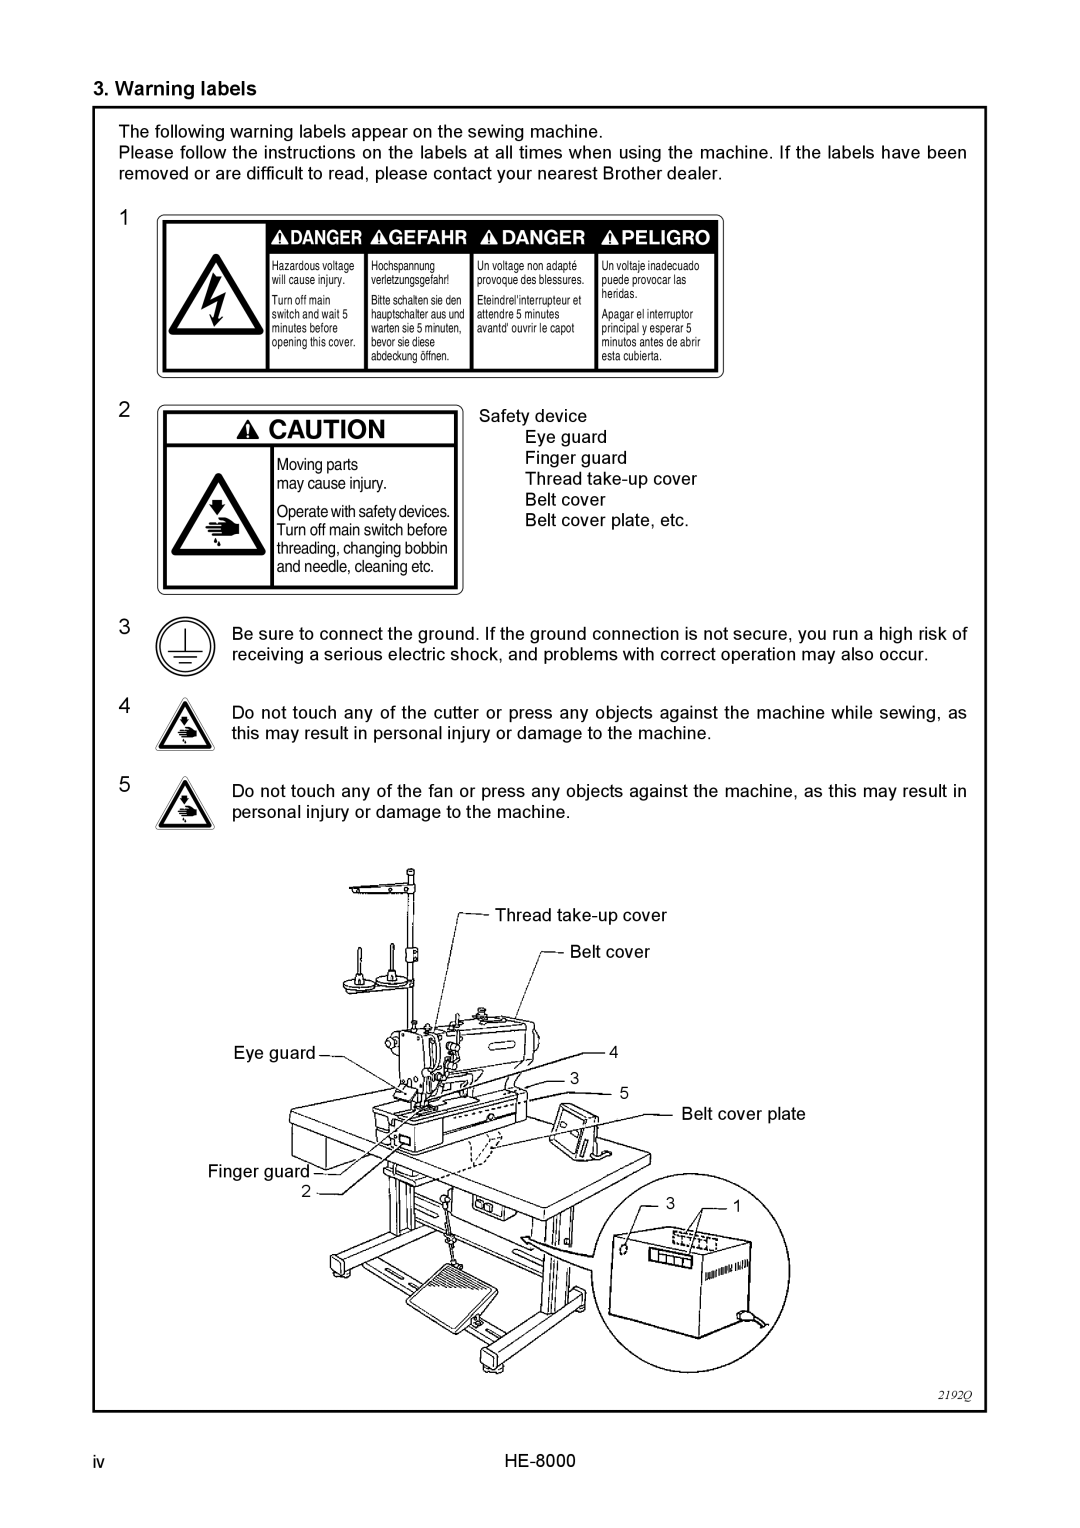 Motorola LH4-B800E, HE-8000 I instruction manual Moving parts may cause injury 